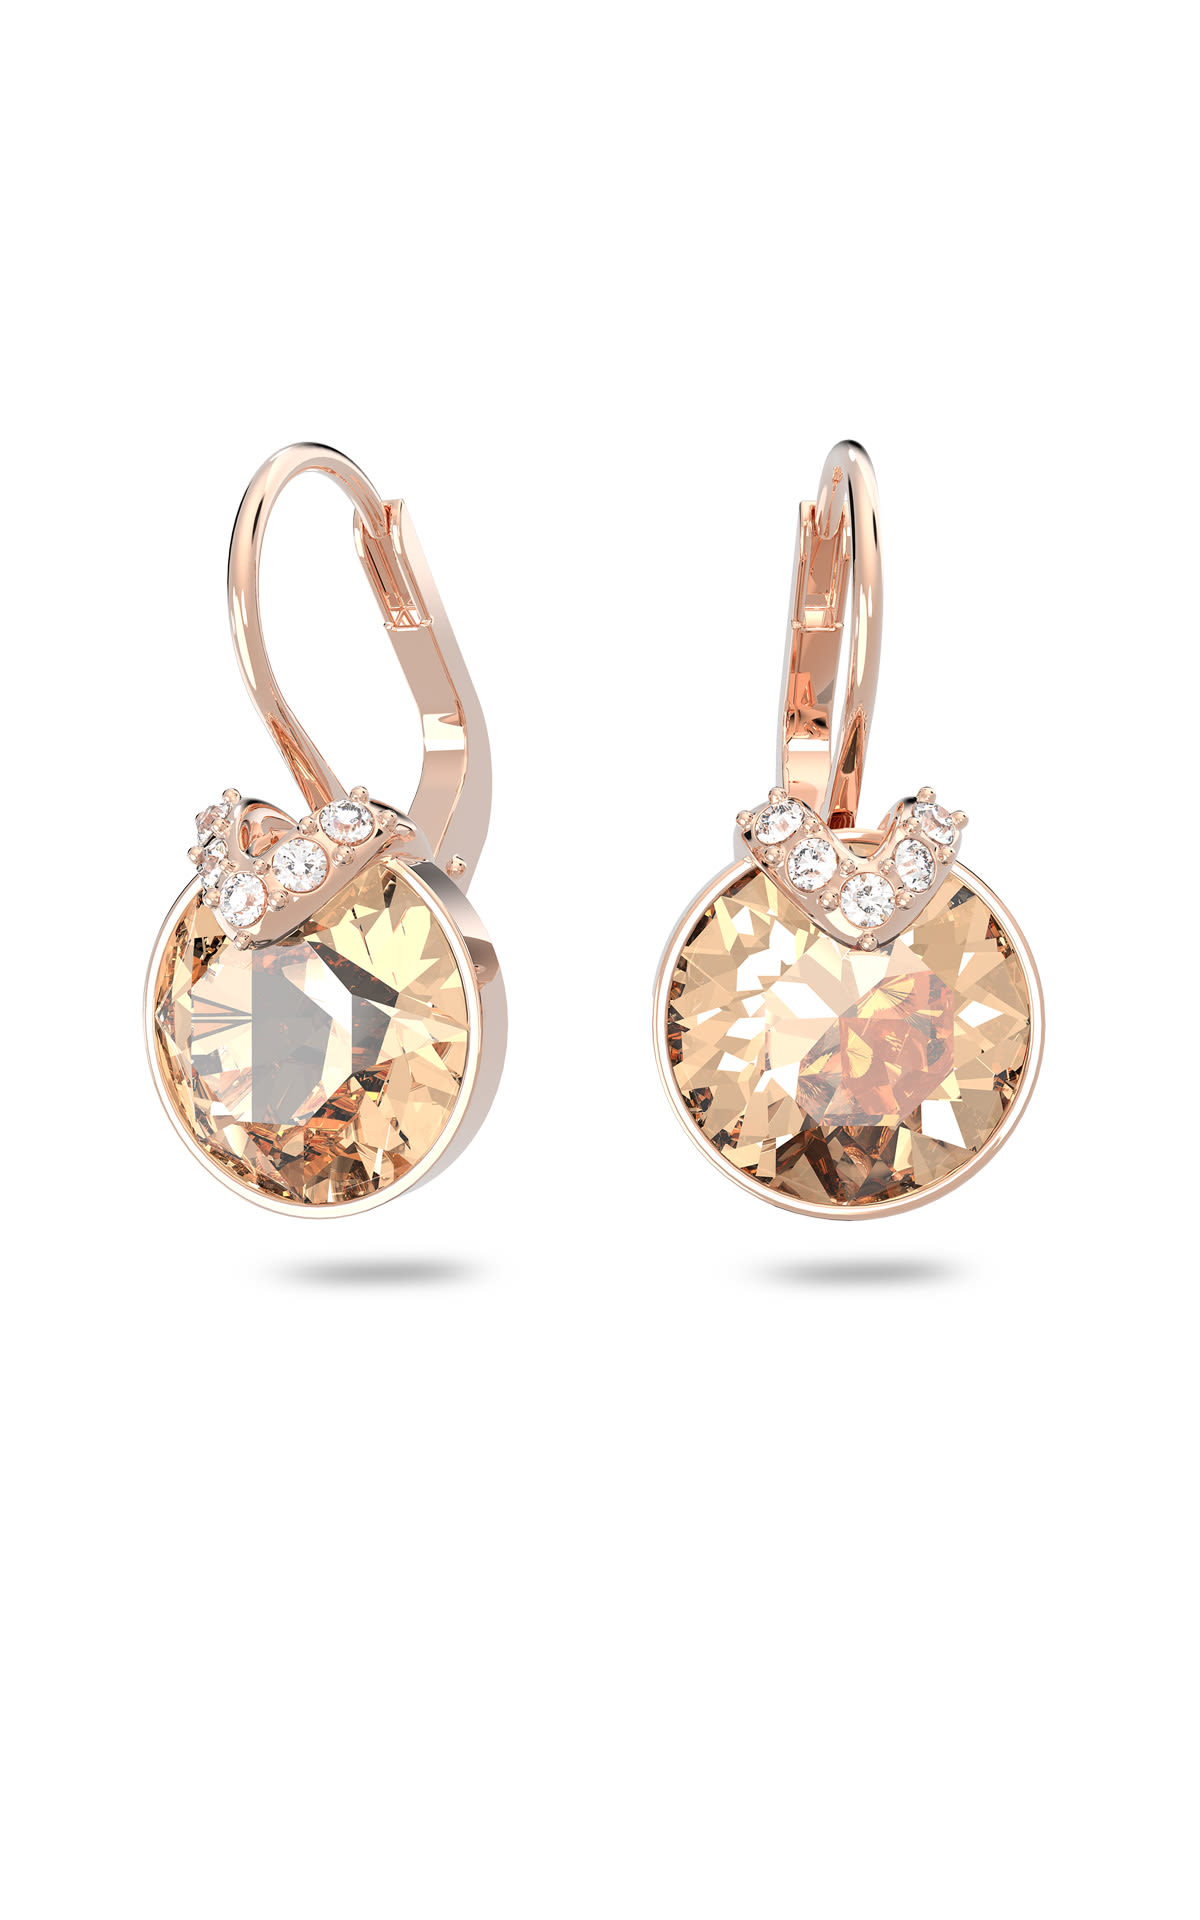 Rose gold earrings with diamonds Swarovski